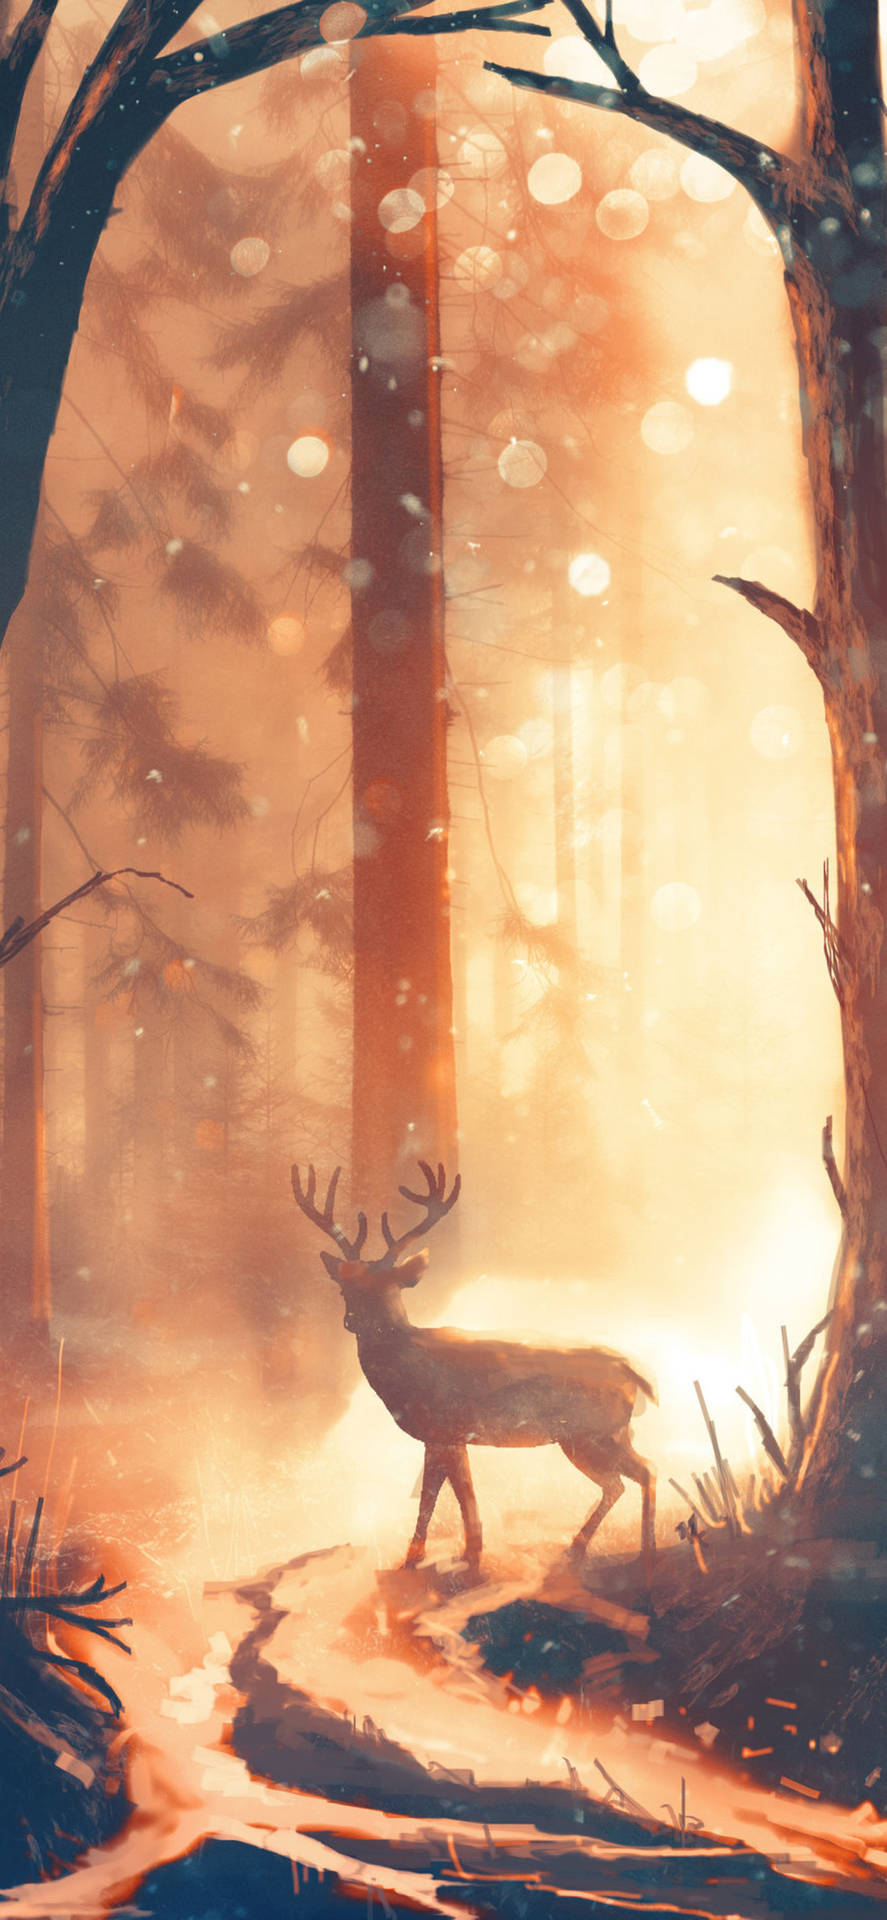 A Deer Walking Through The Forest At Sunset Wallpaper